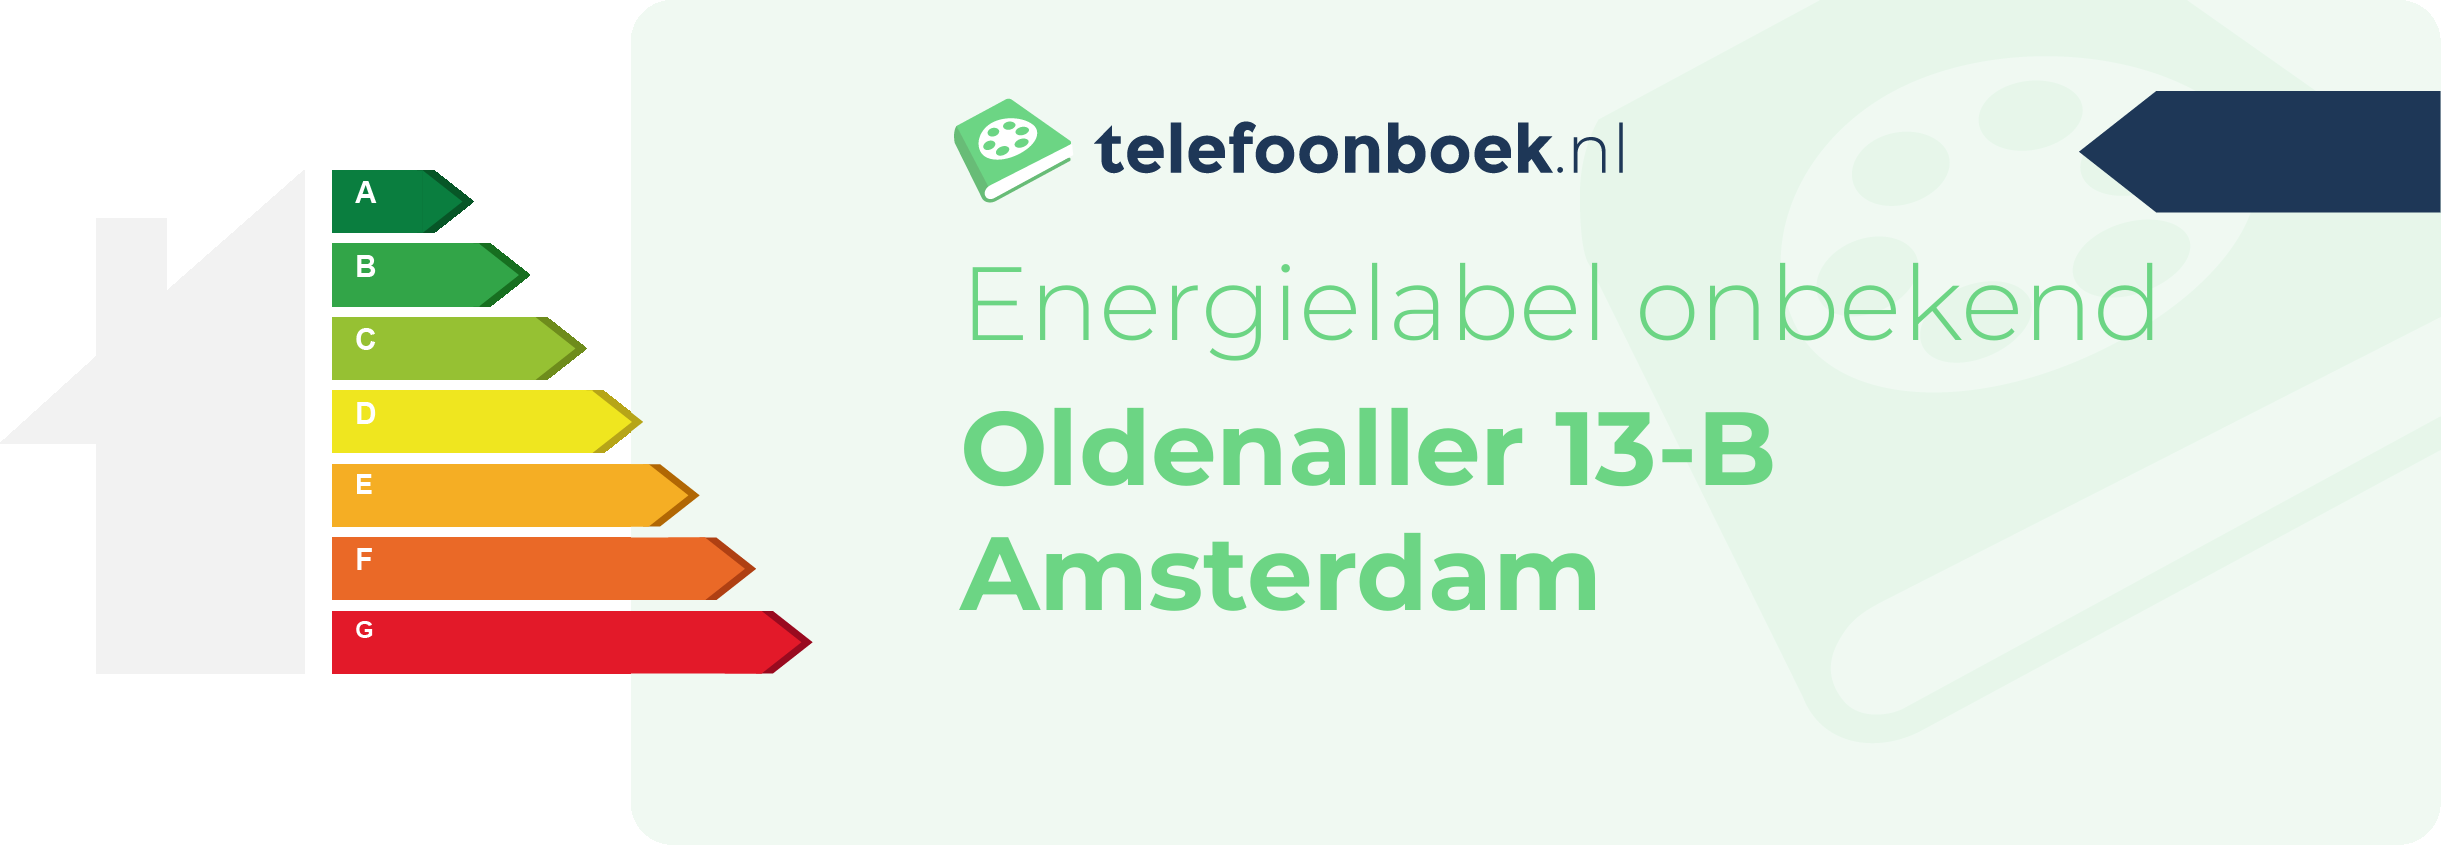 Energielabel Oldenaller 13-B Amsterdam